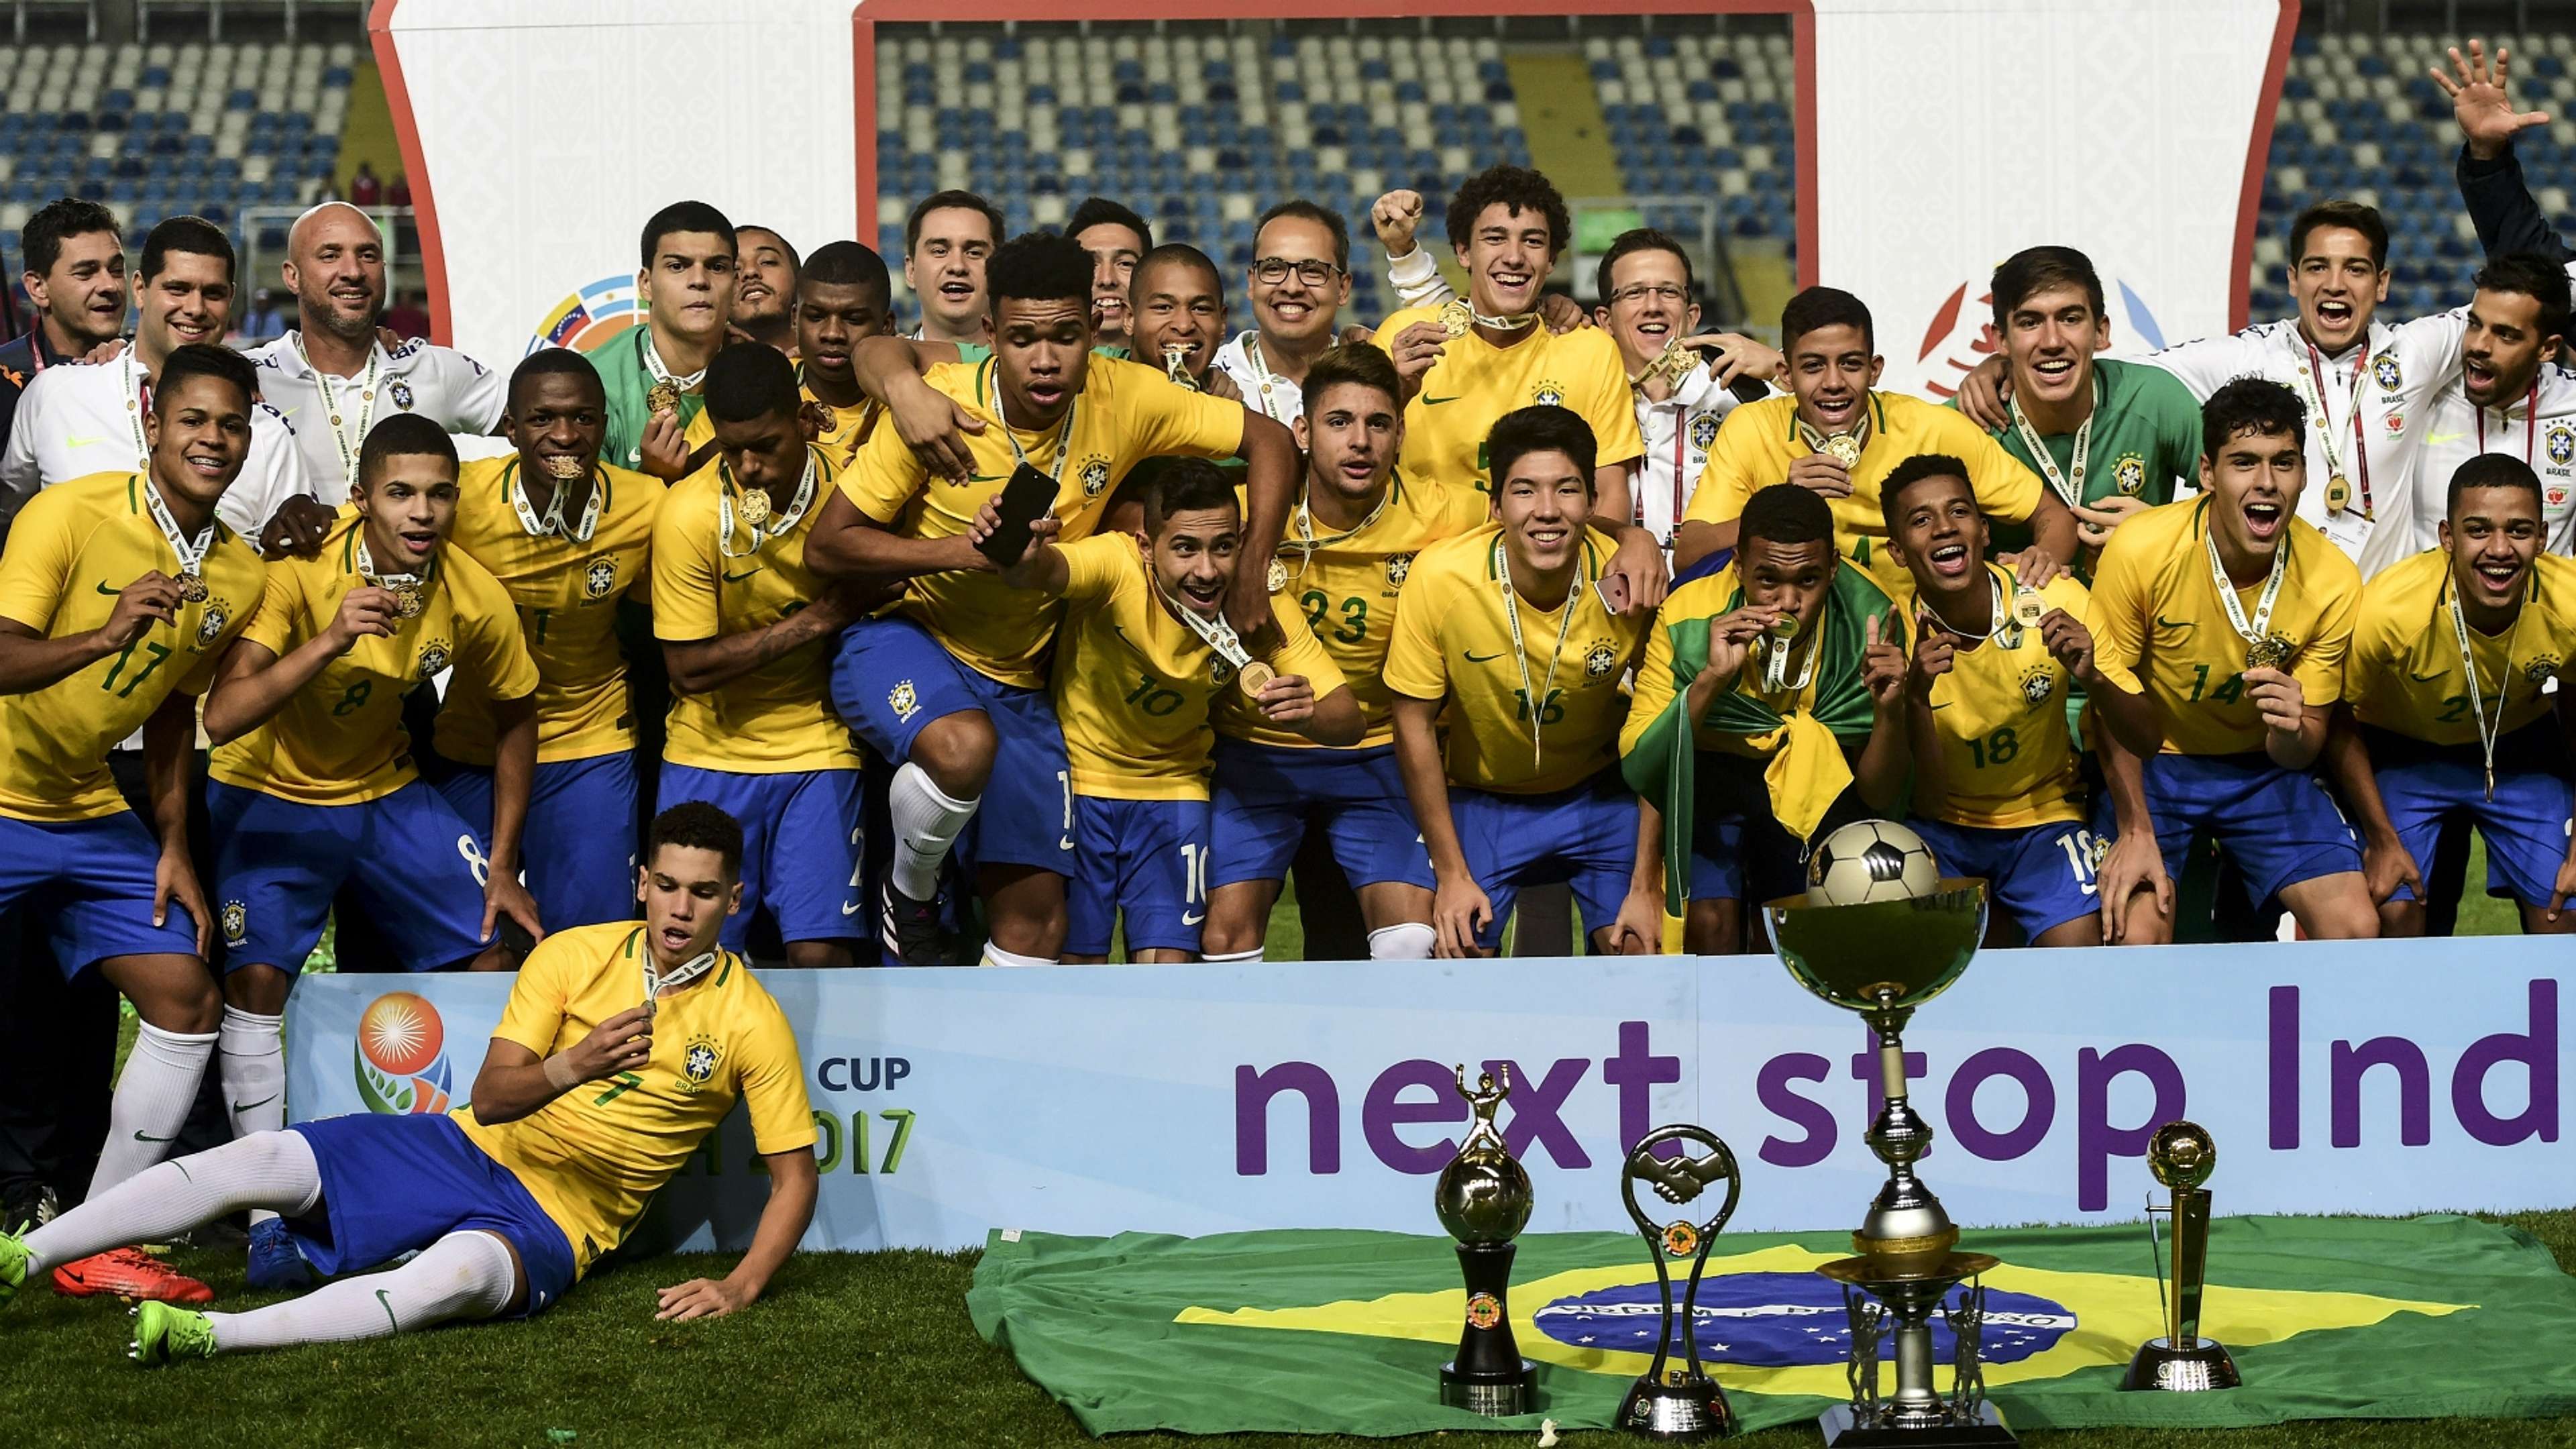 Brazil under-17 South American champions 2017